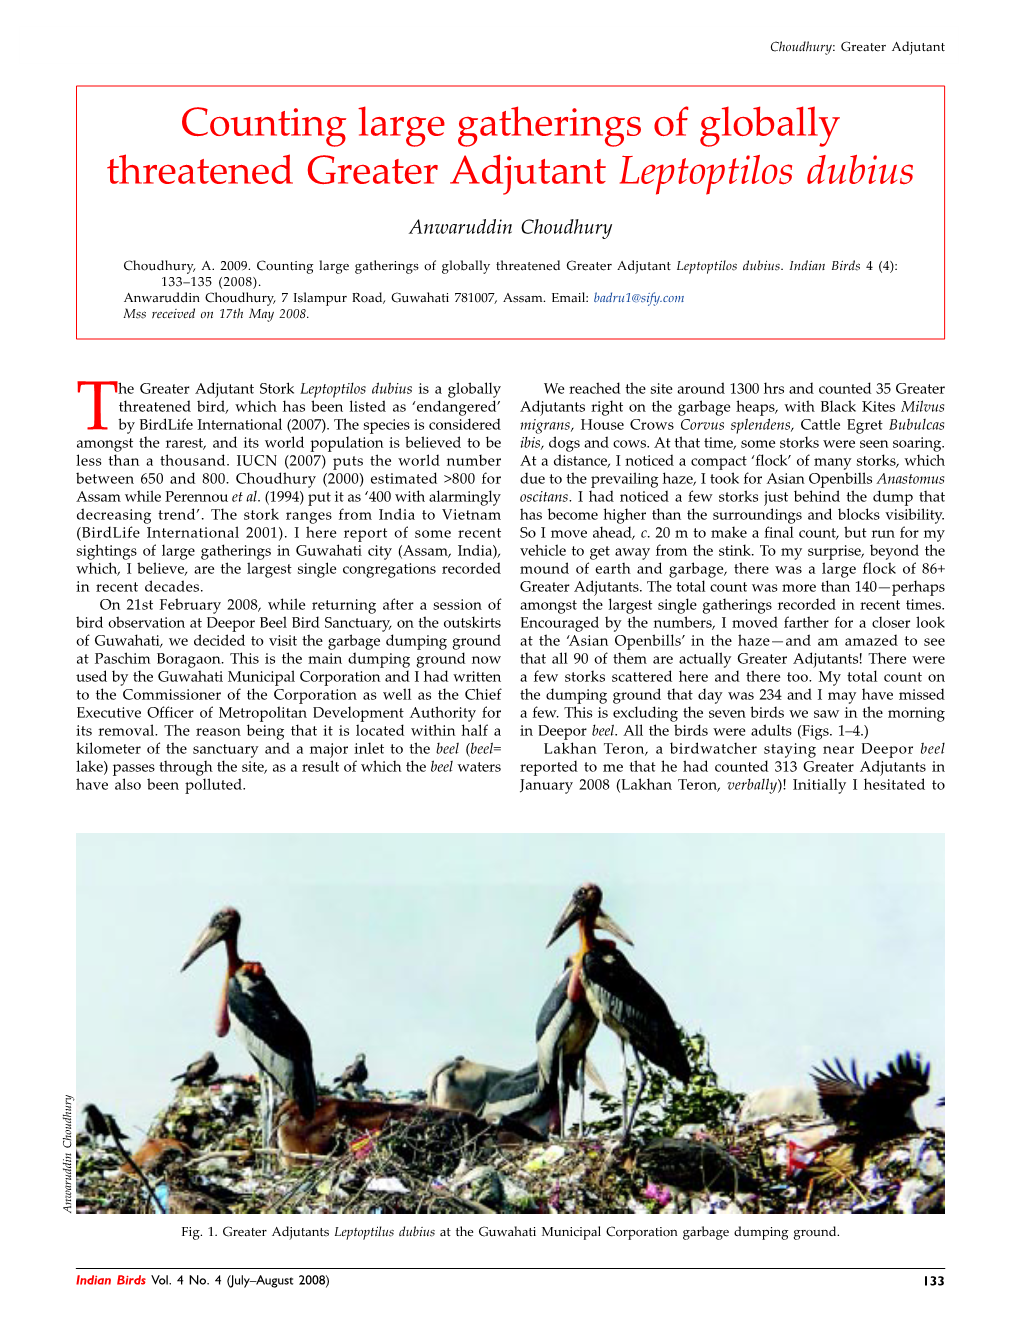 Counting Large Gatherings of Globally Threatened Greater Adjutant Leptoptilos Dubius